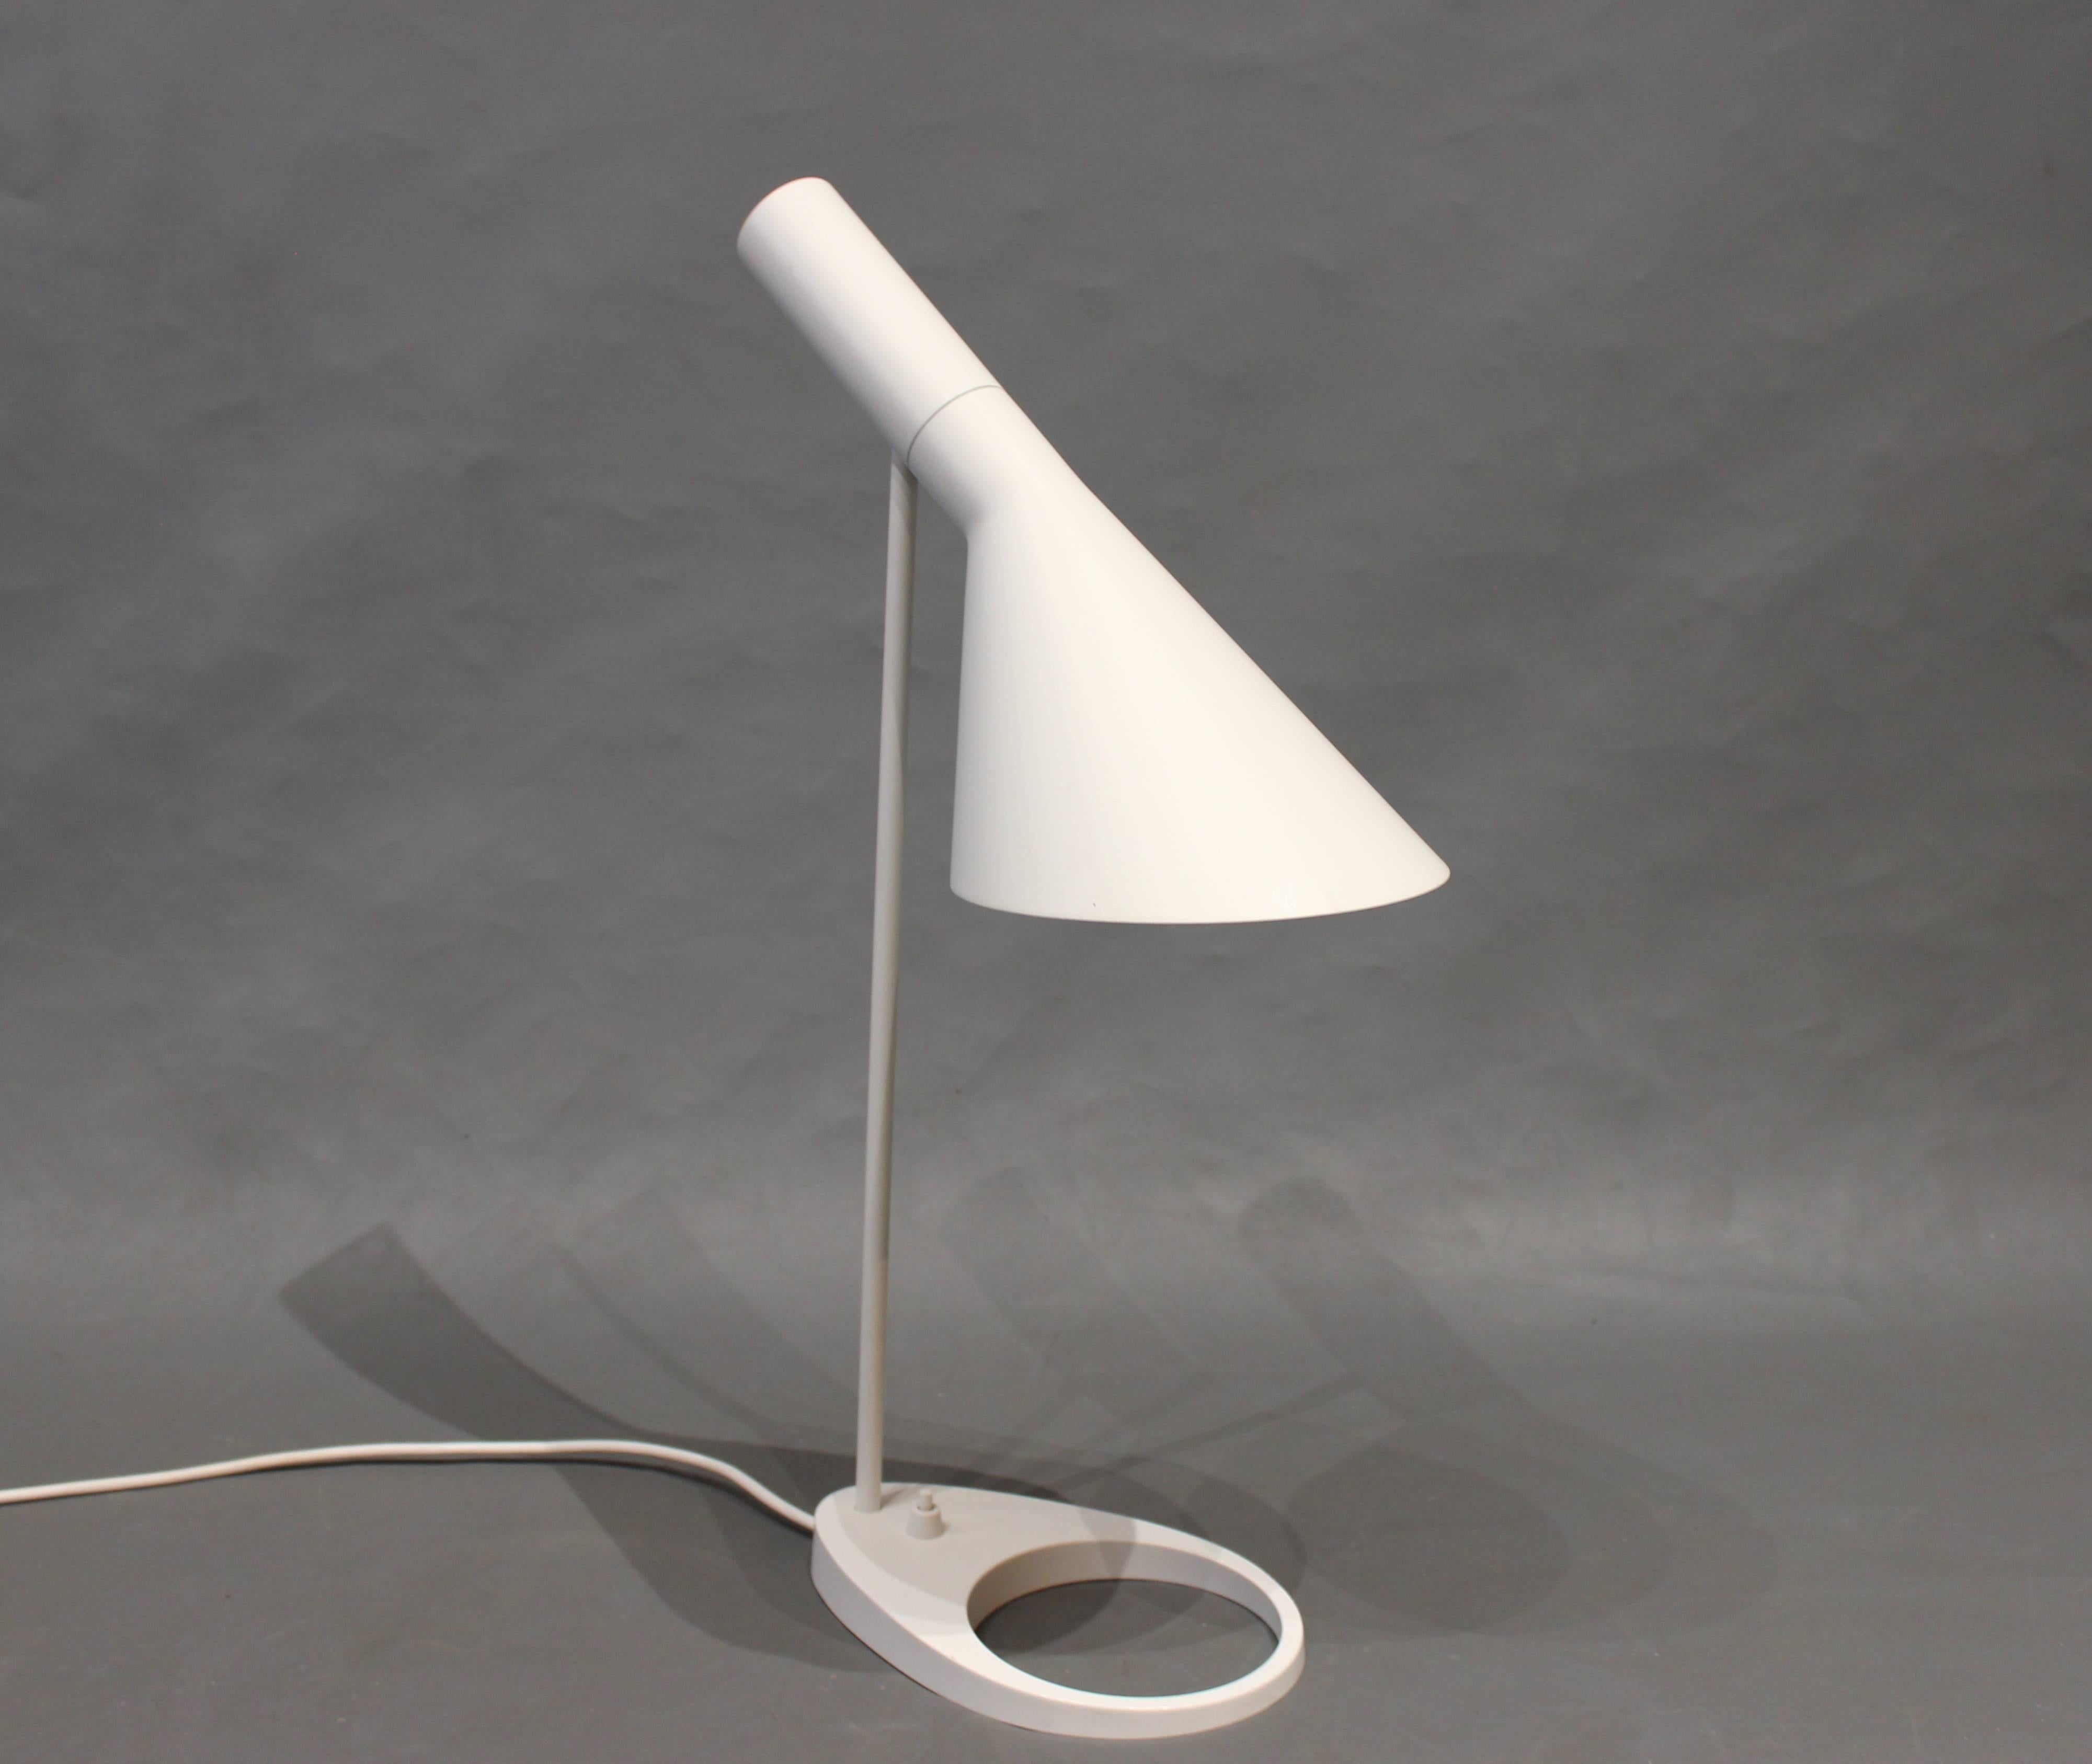 Scandinavian Modern Arne Jacobsen, White Table Lamp, Designed in 1960 and by Louis Poulsen